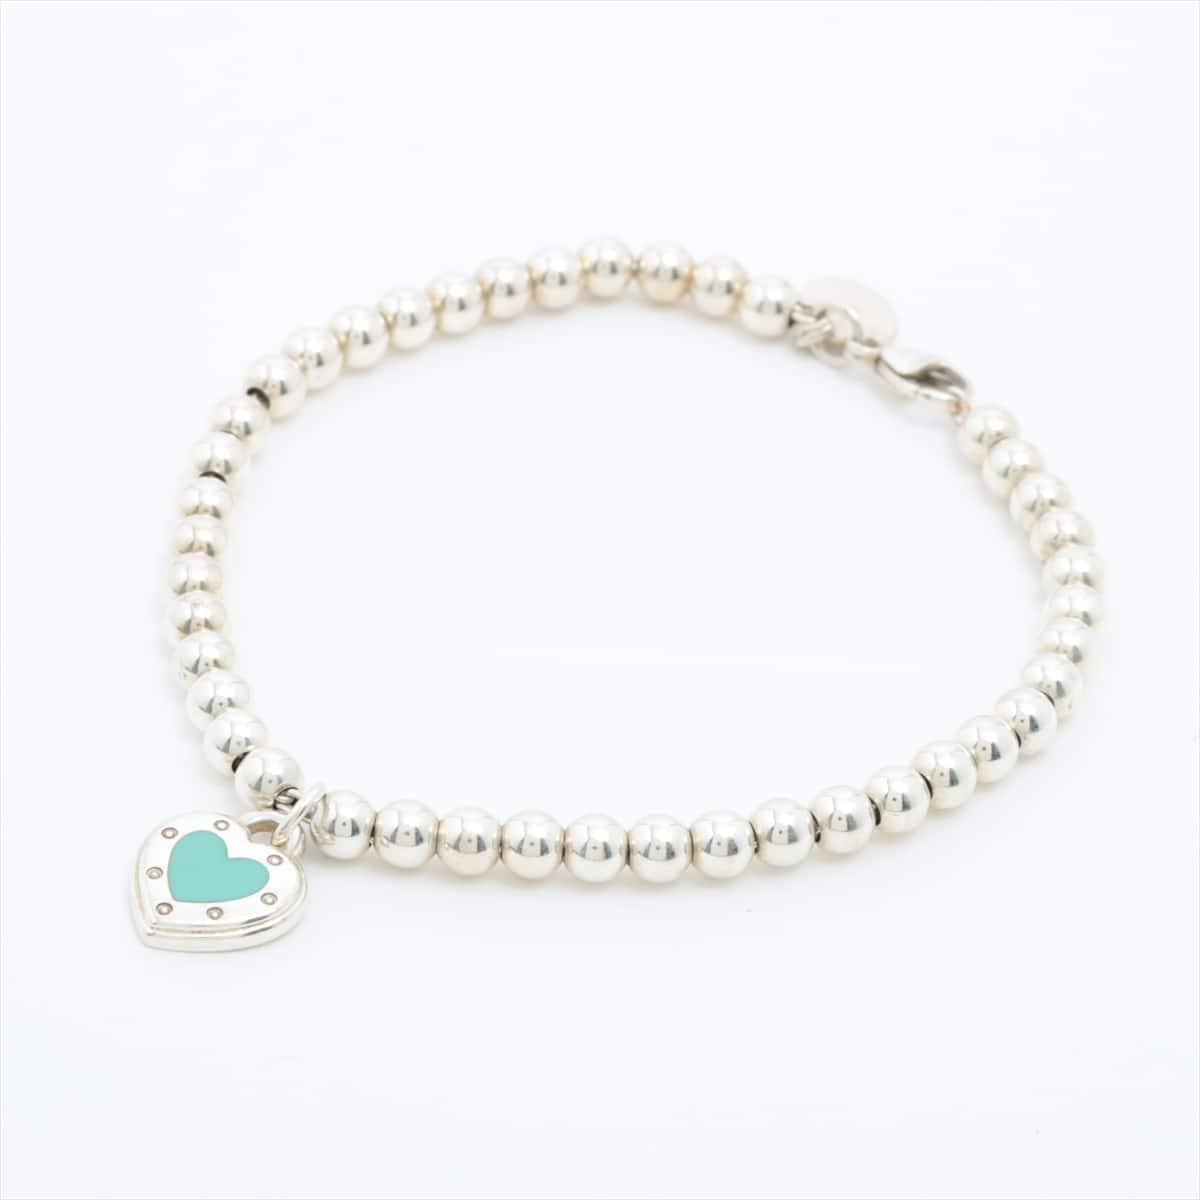 Tiffany Return To Tiffany Heart Tag Bracelet 925 6.0g Silver